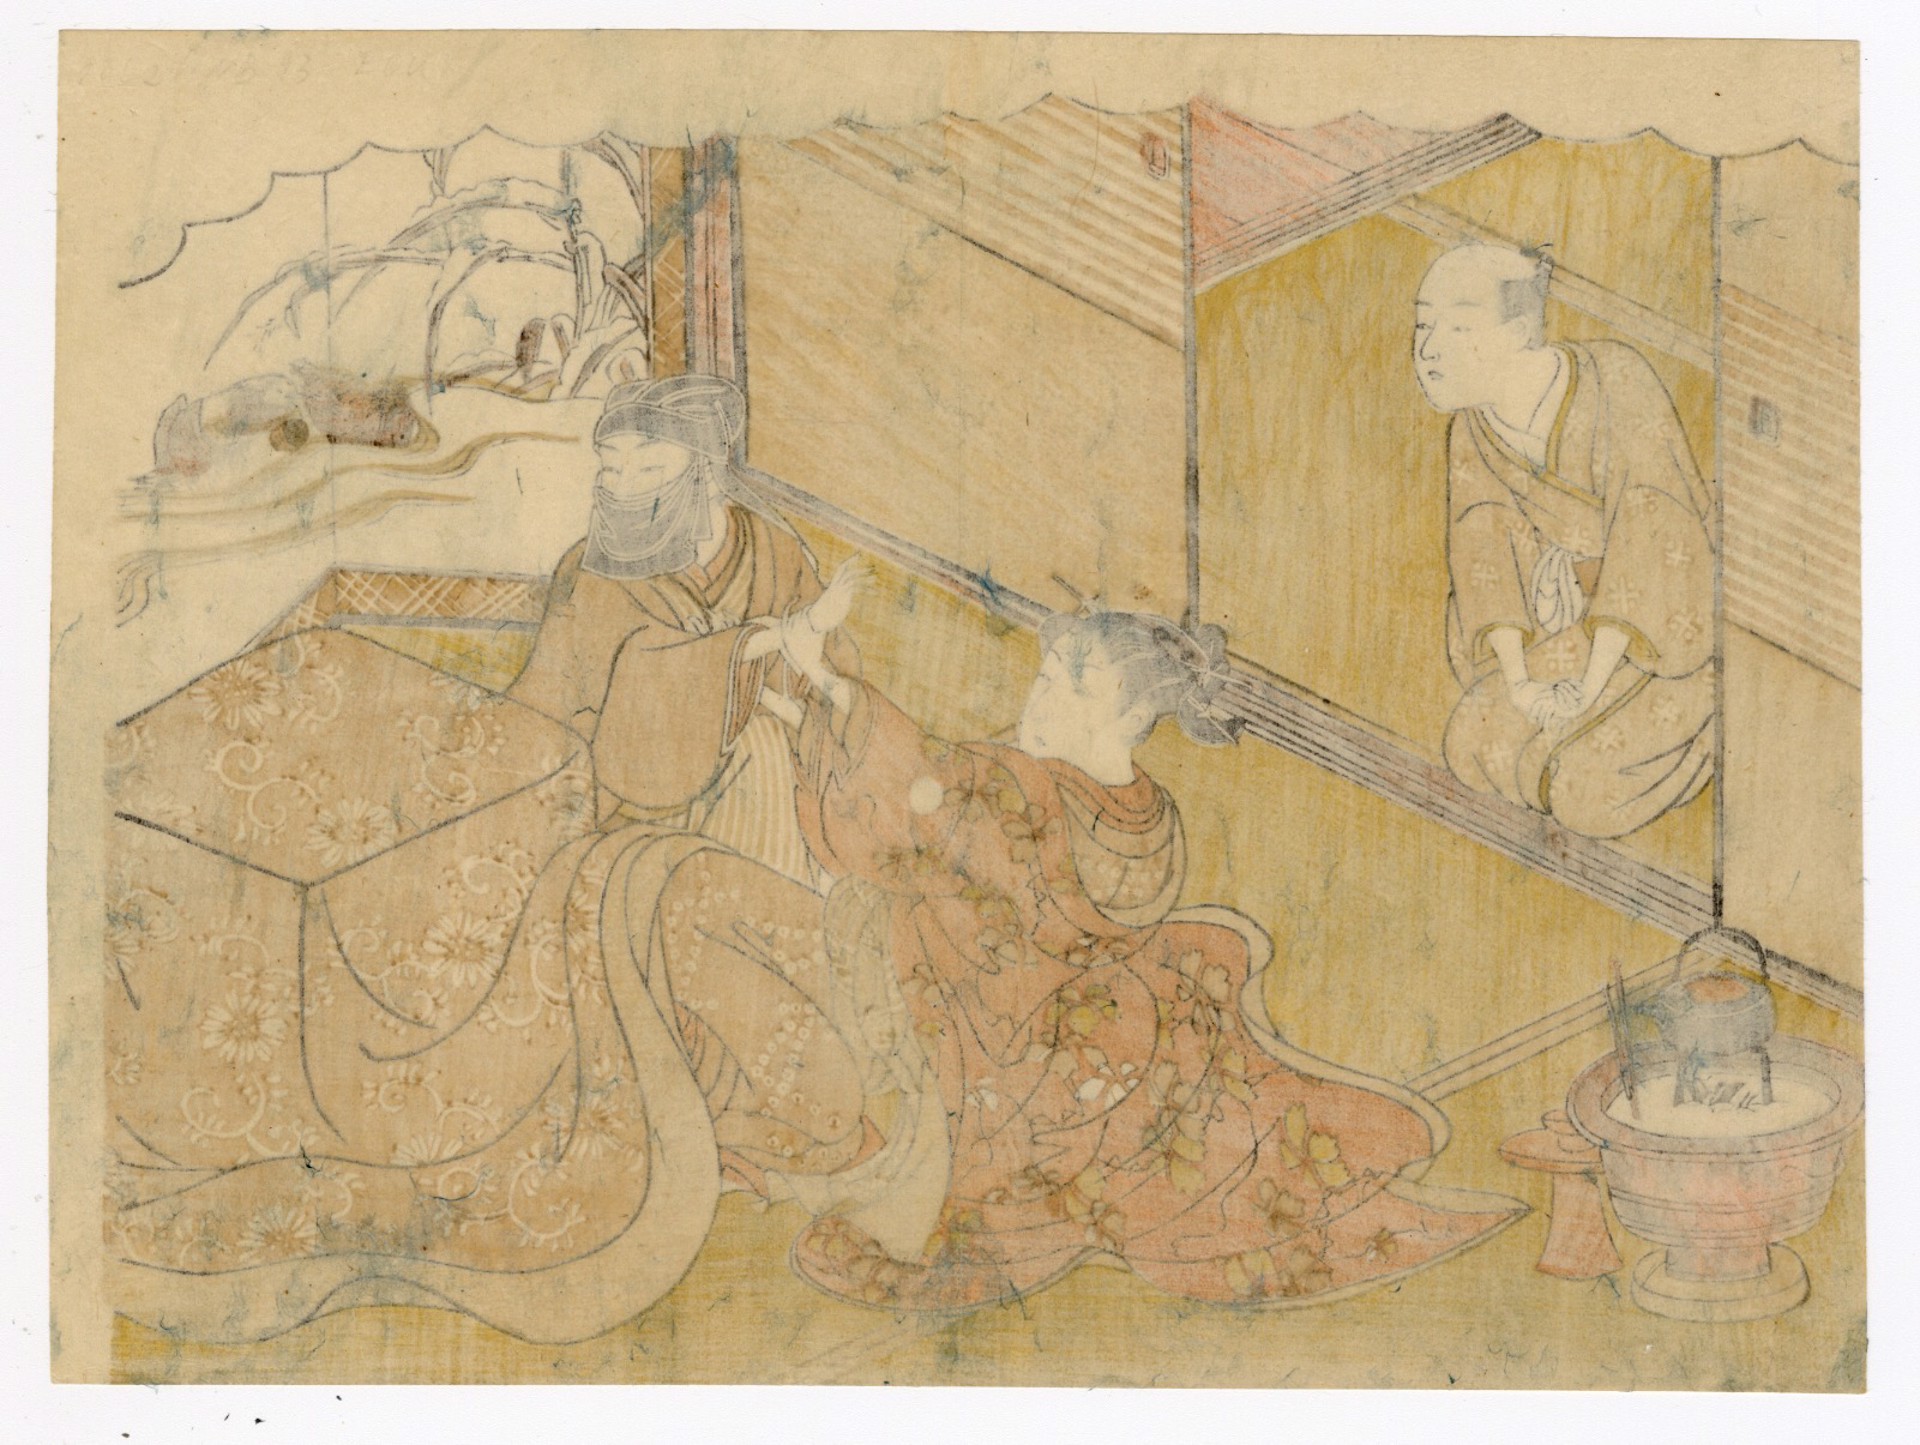 A Woman, Under a Kotatsu, Fighting off a Masked Man as a servant Watches. by Harunobu